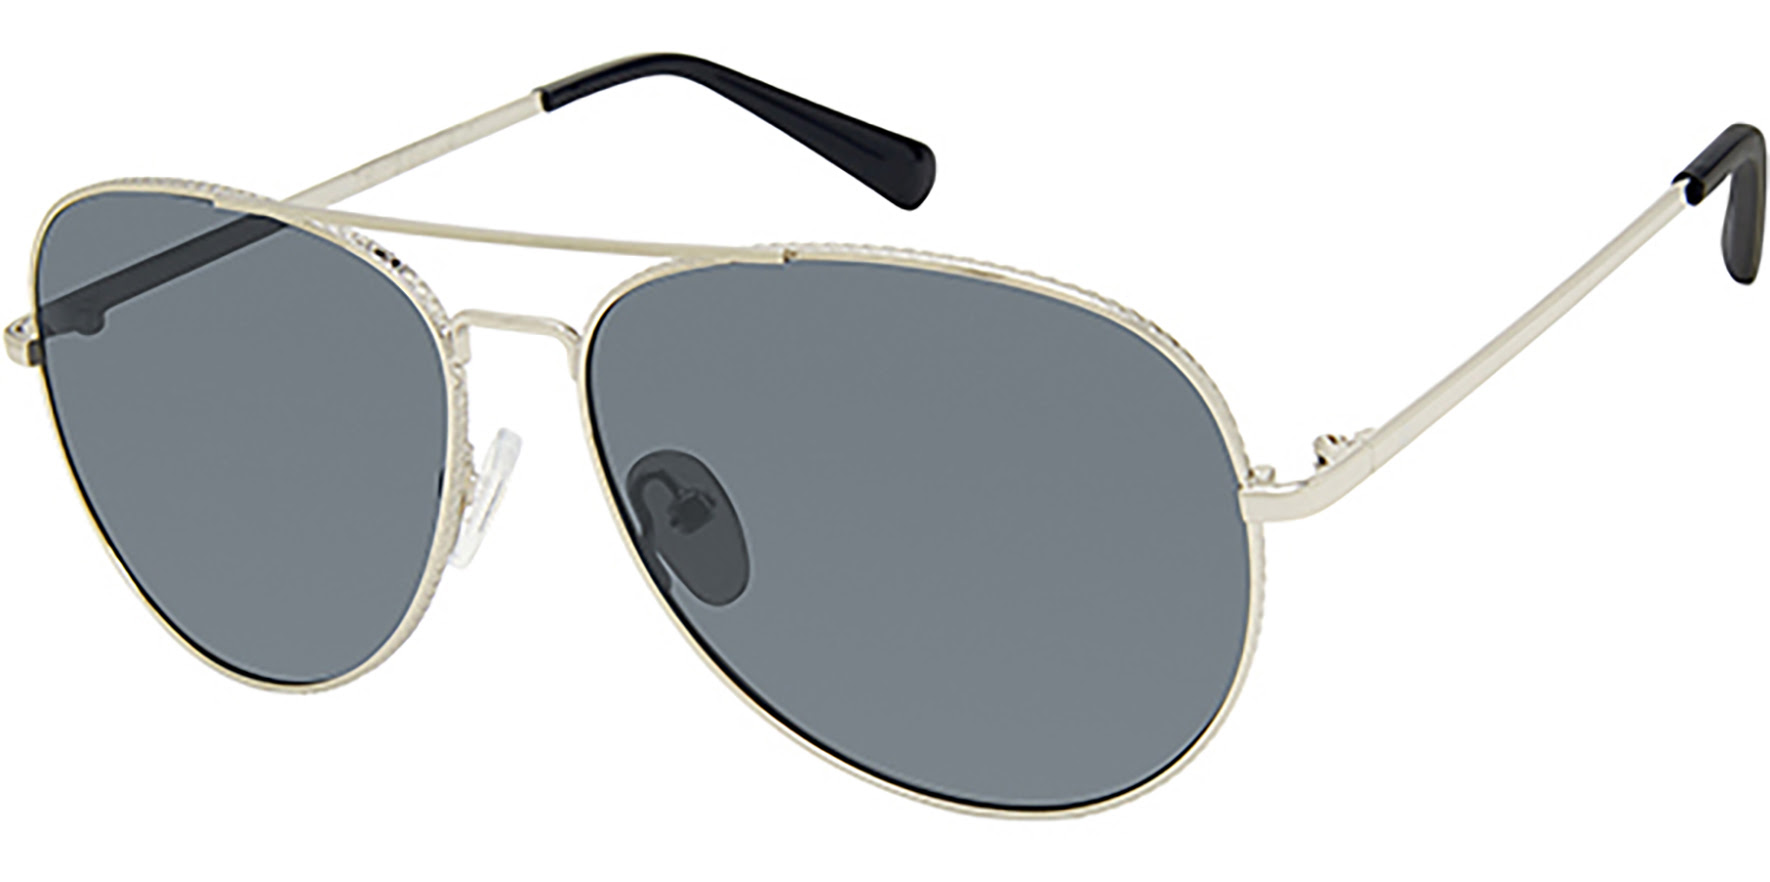 Sunglasses: Sperry Polarized $20, Carrera Polarized $29, Hugo Boss $36 & More + Free Shipping